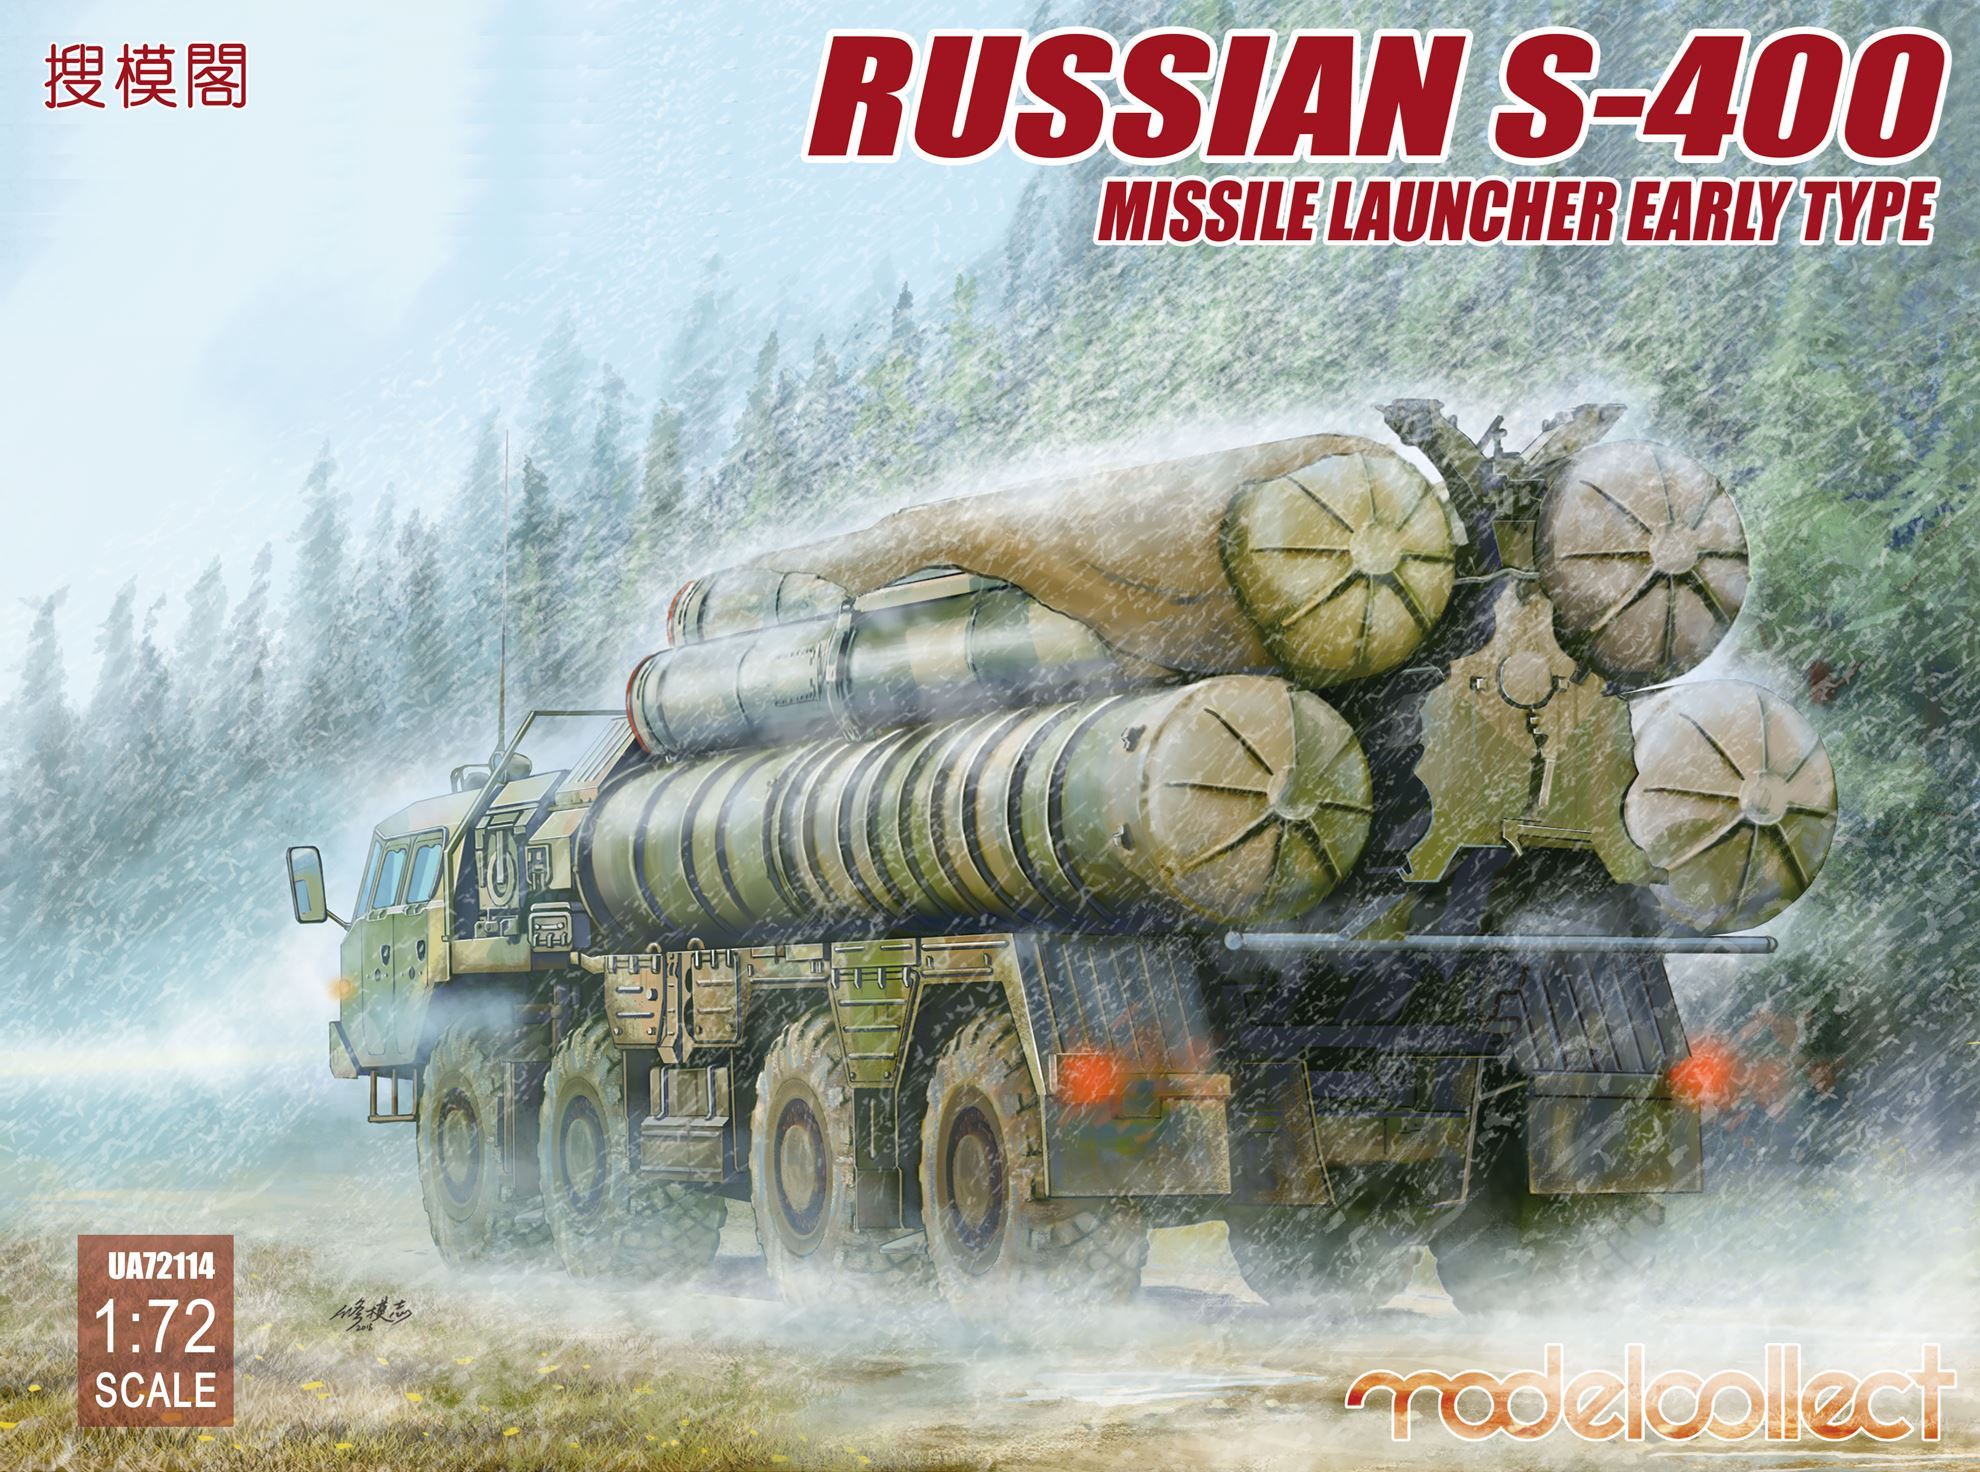 UA72114  техника и вооружение  ЗРК  Russian S-400 Missile Launcher early type  (1:72)